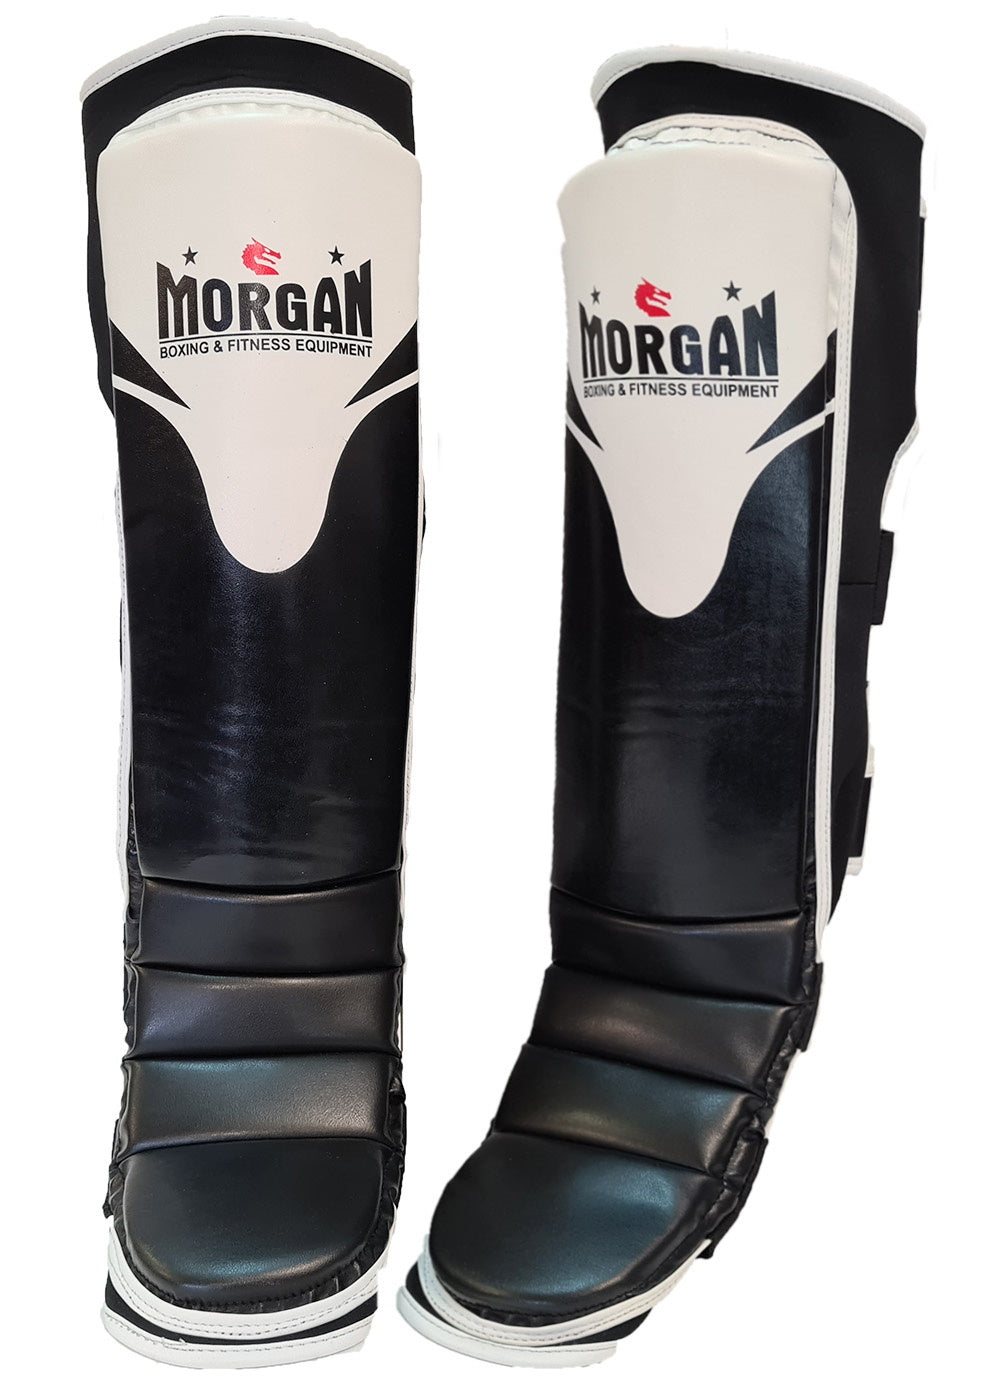 Morgan V2 Professional Neoprene MMA Shin & Instep Guard - Fitness Hero Brand new